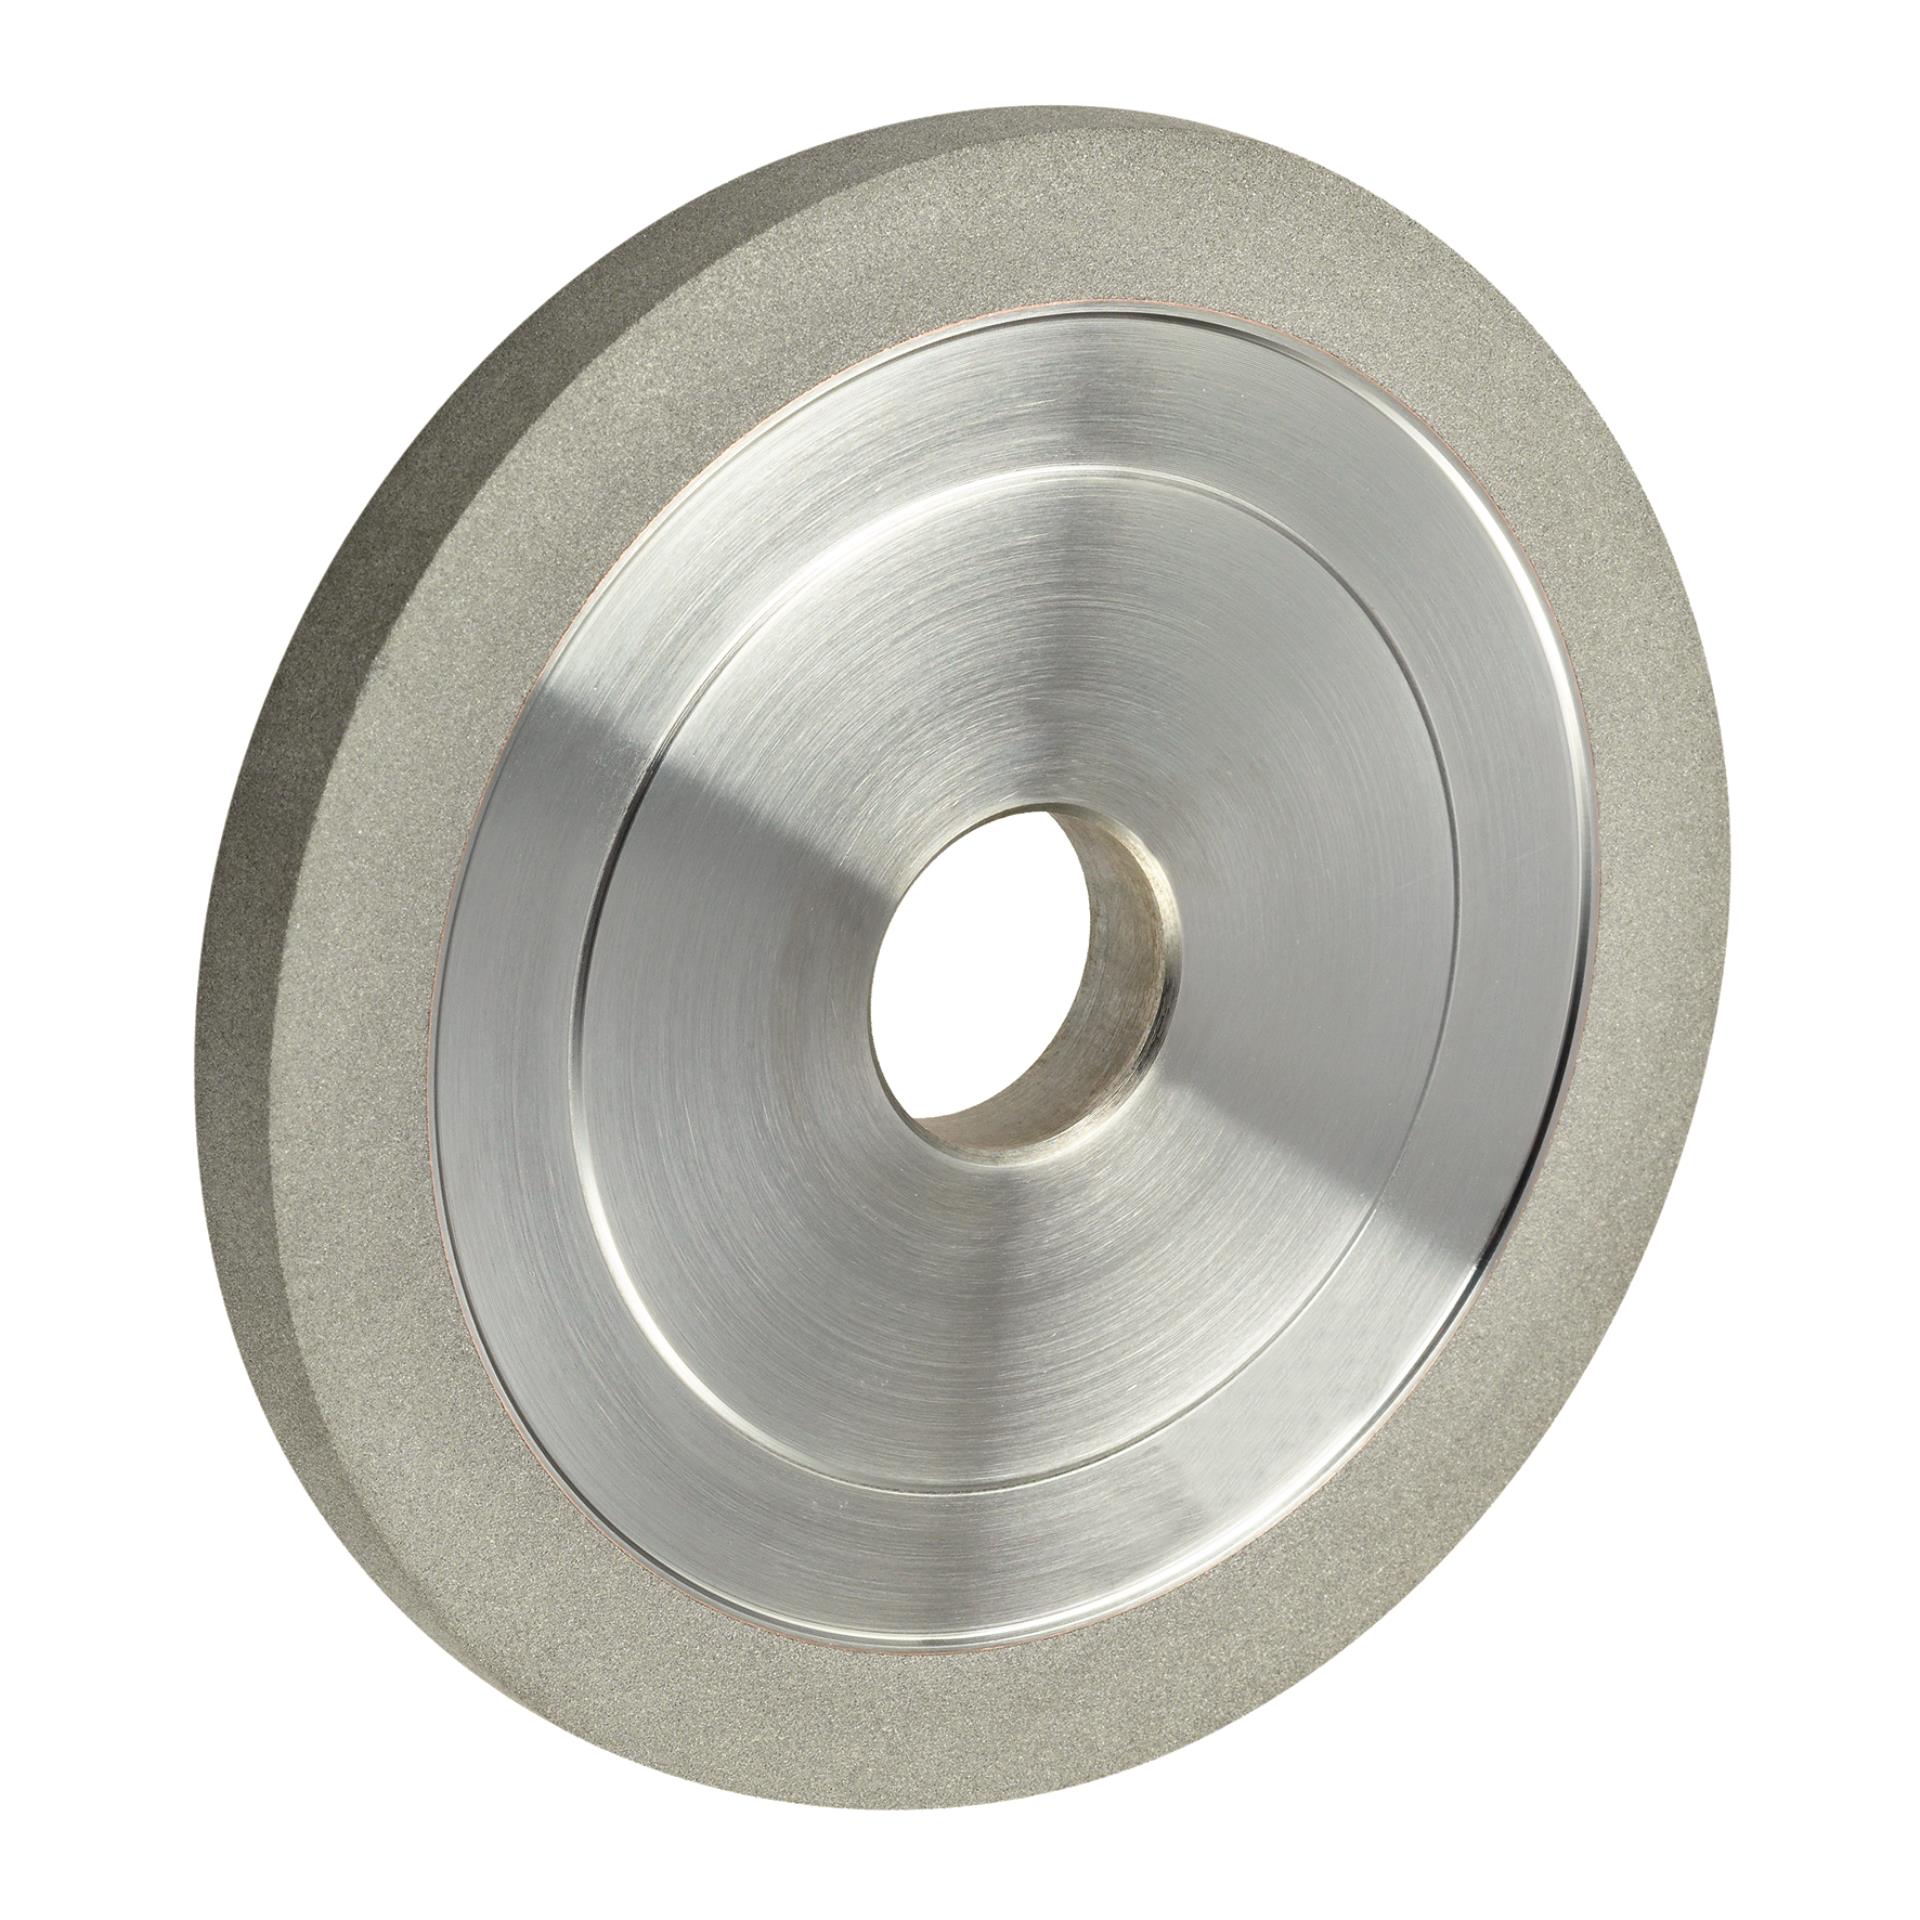 20 x 5 x 2.5cm Aluminum Core Serrated Bearings Belt Grinder Sander Wheel